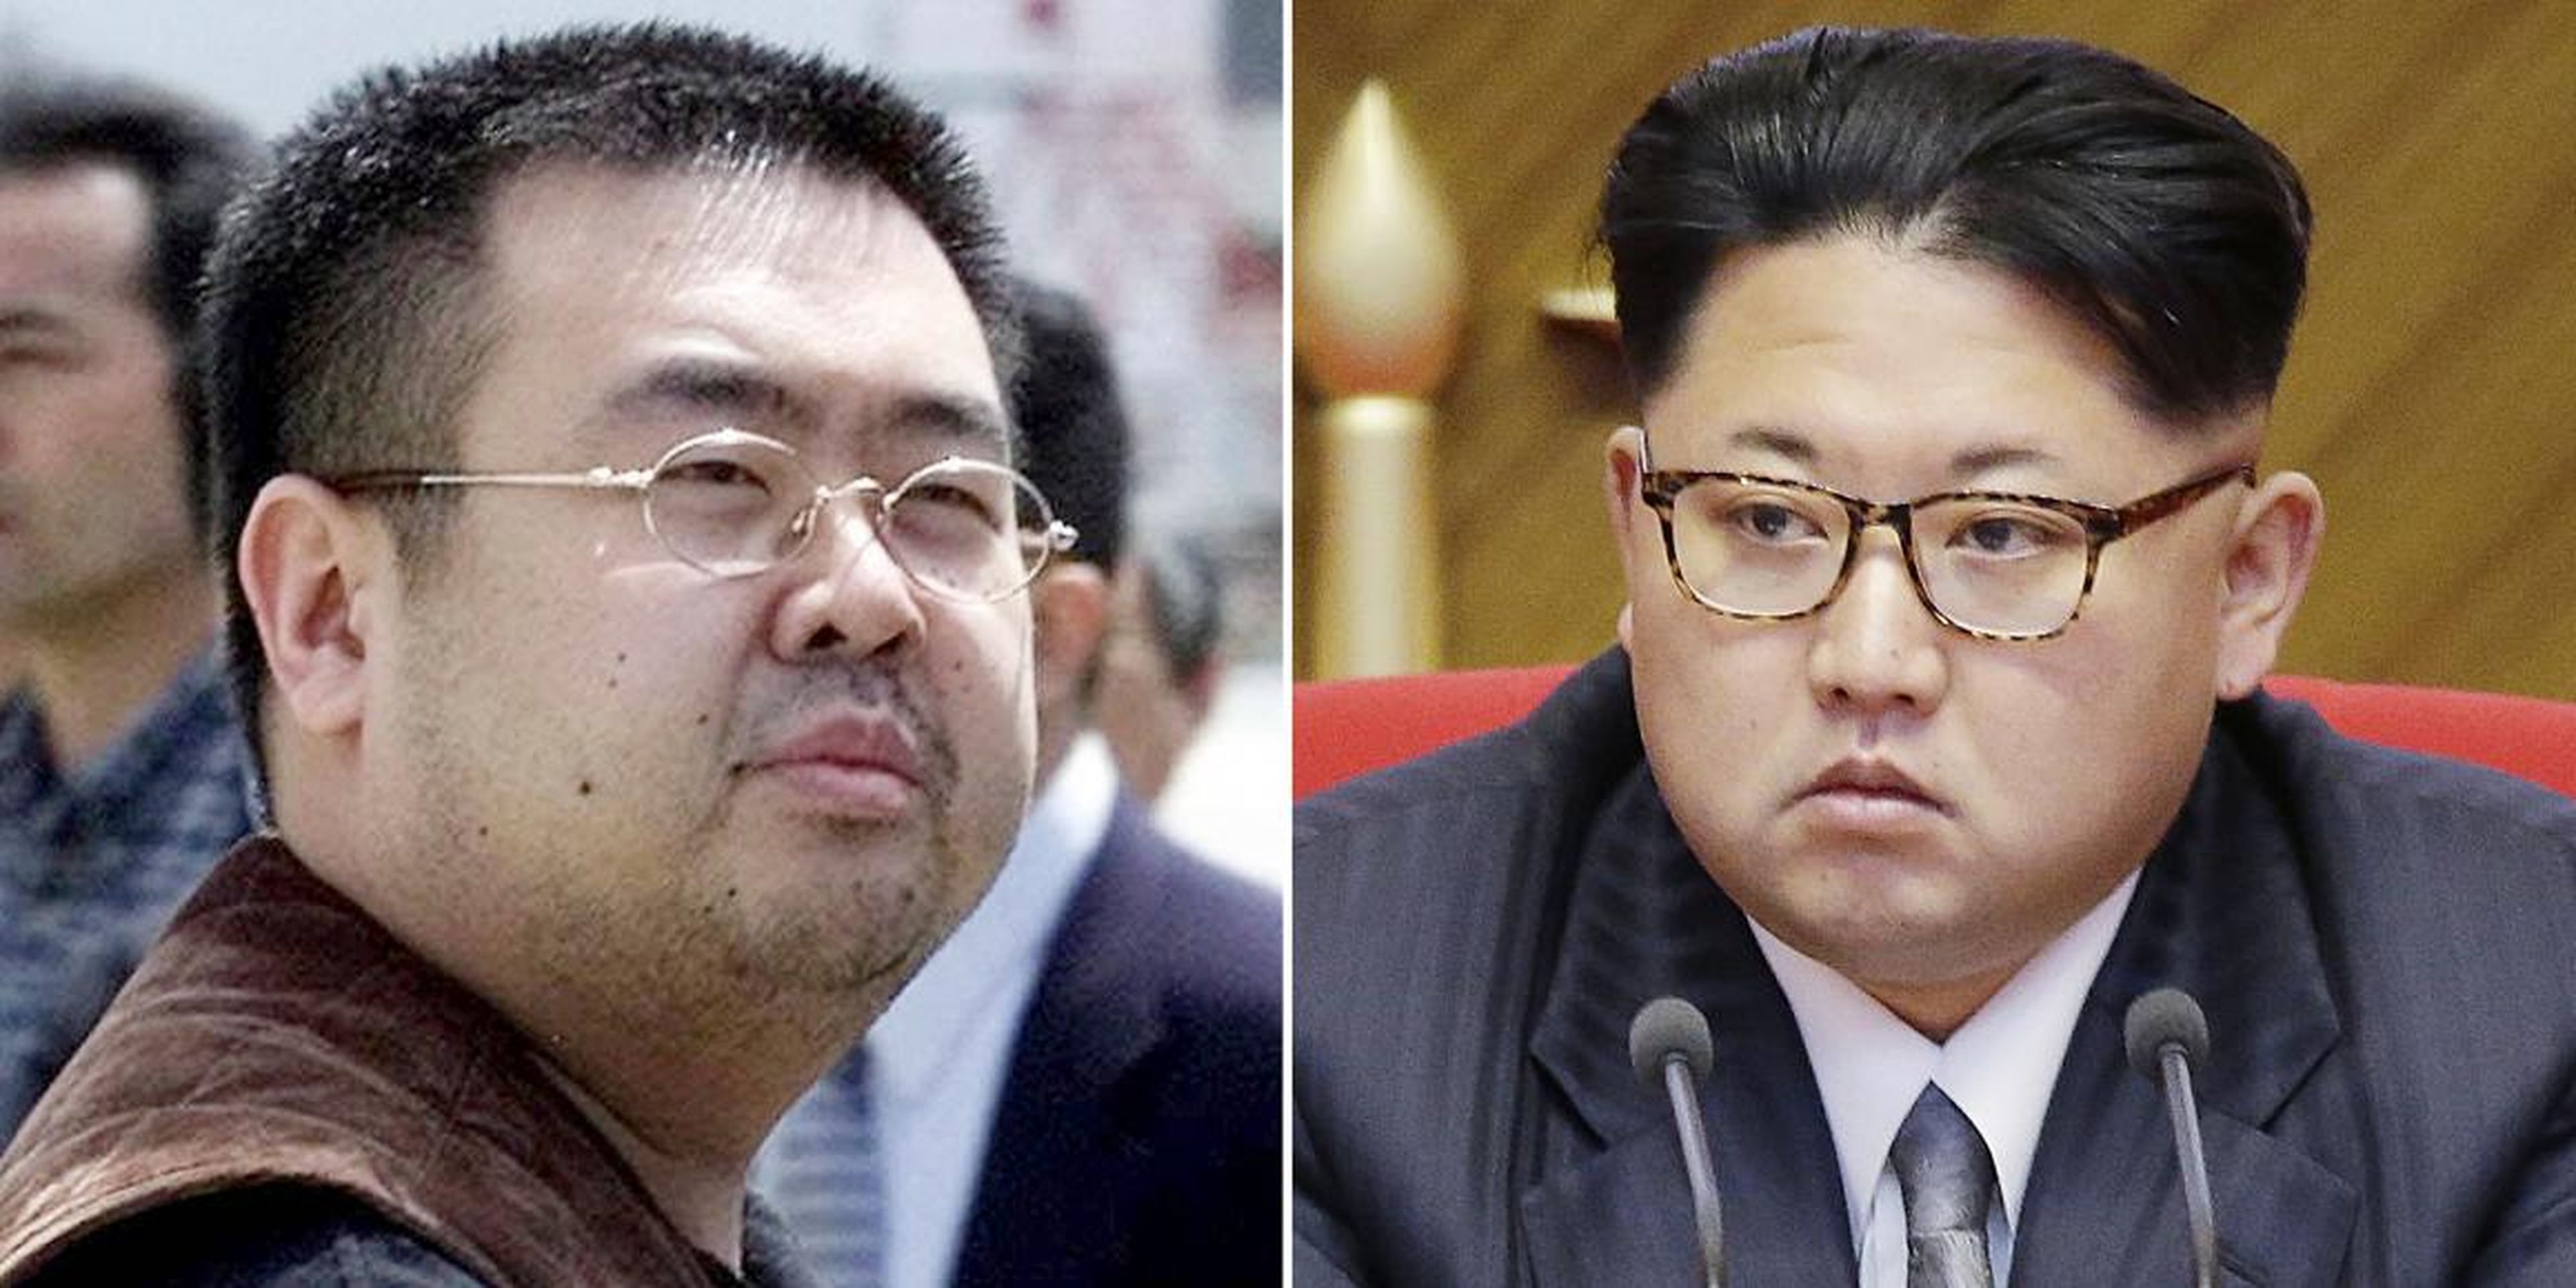 Kim Jong-nam (left) and North Korean leader Kim Jong Un.